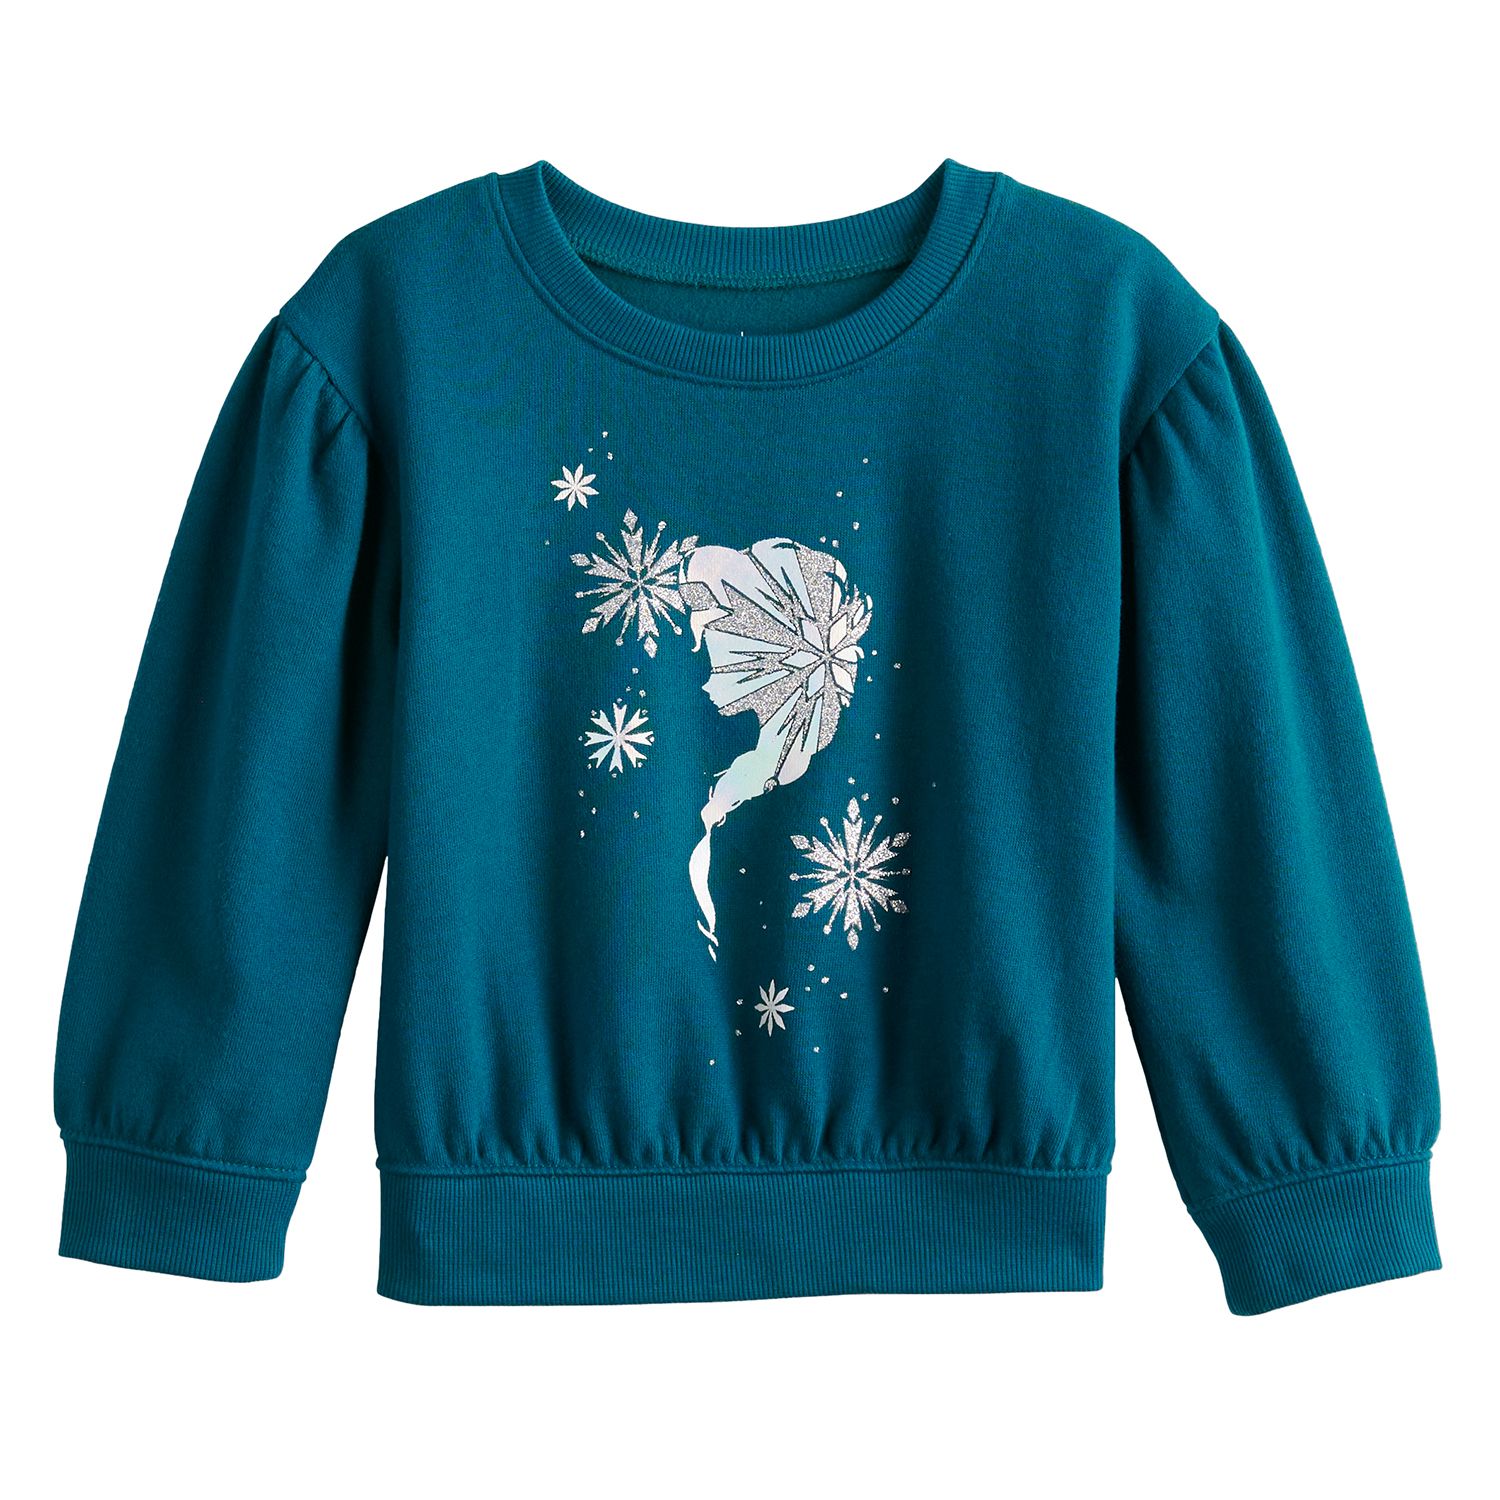 Image for Disney/Jumping Beans Disney's Frozen Elsa Toddler Girl Fleece Sweatshirt by Jumping Beans® at Kohl's.